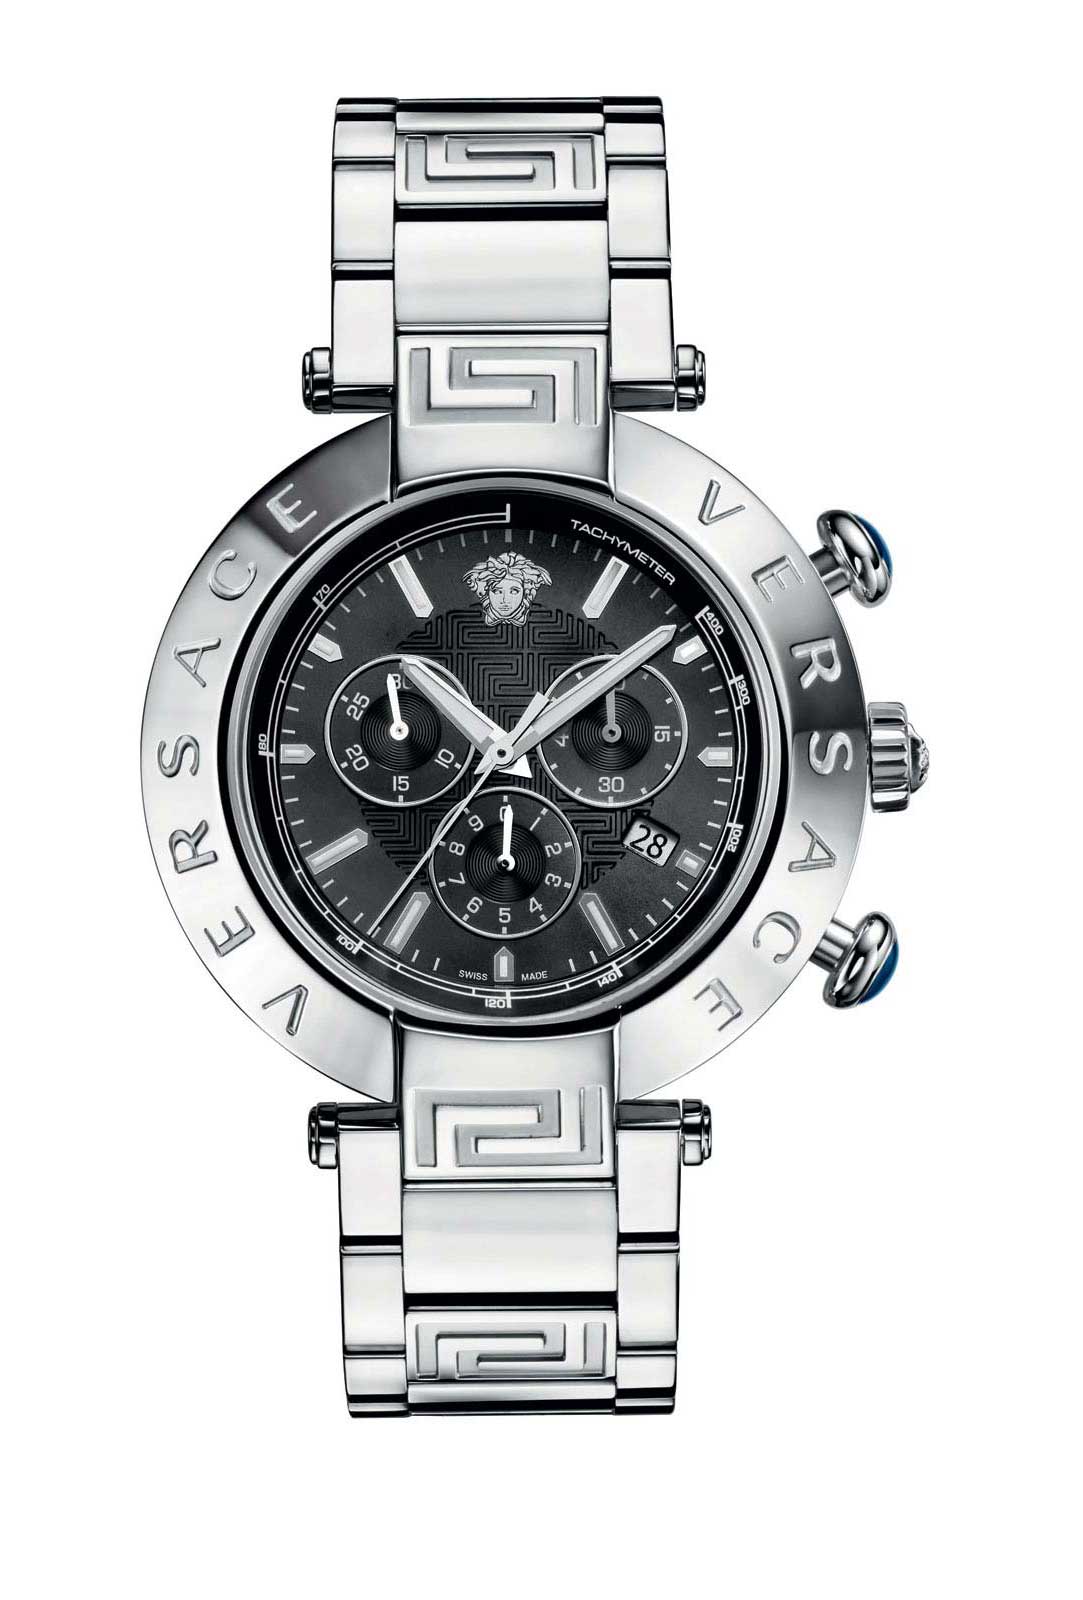 Versace QUARTZ CHRONO watch 5040D BLACK